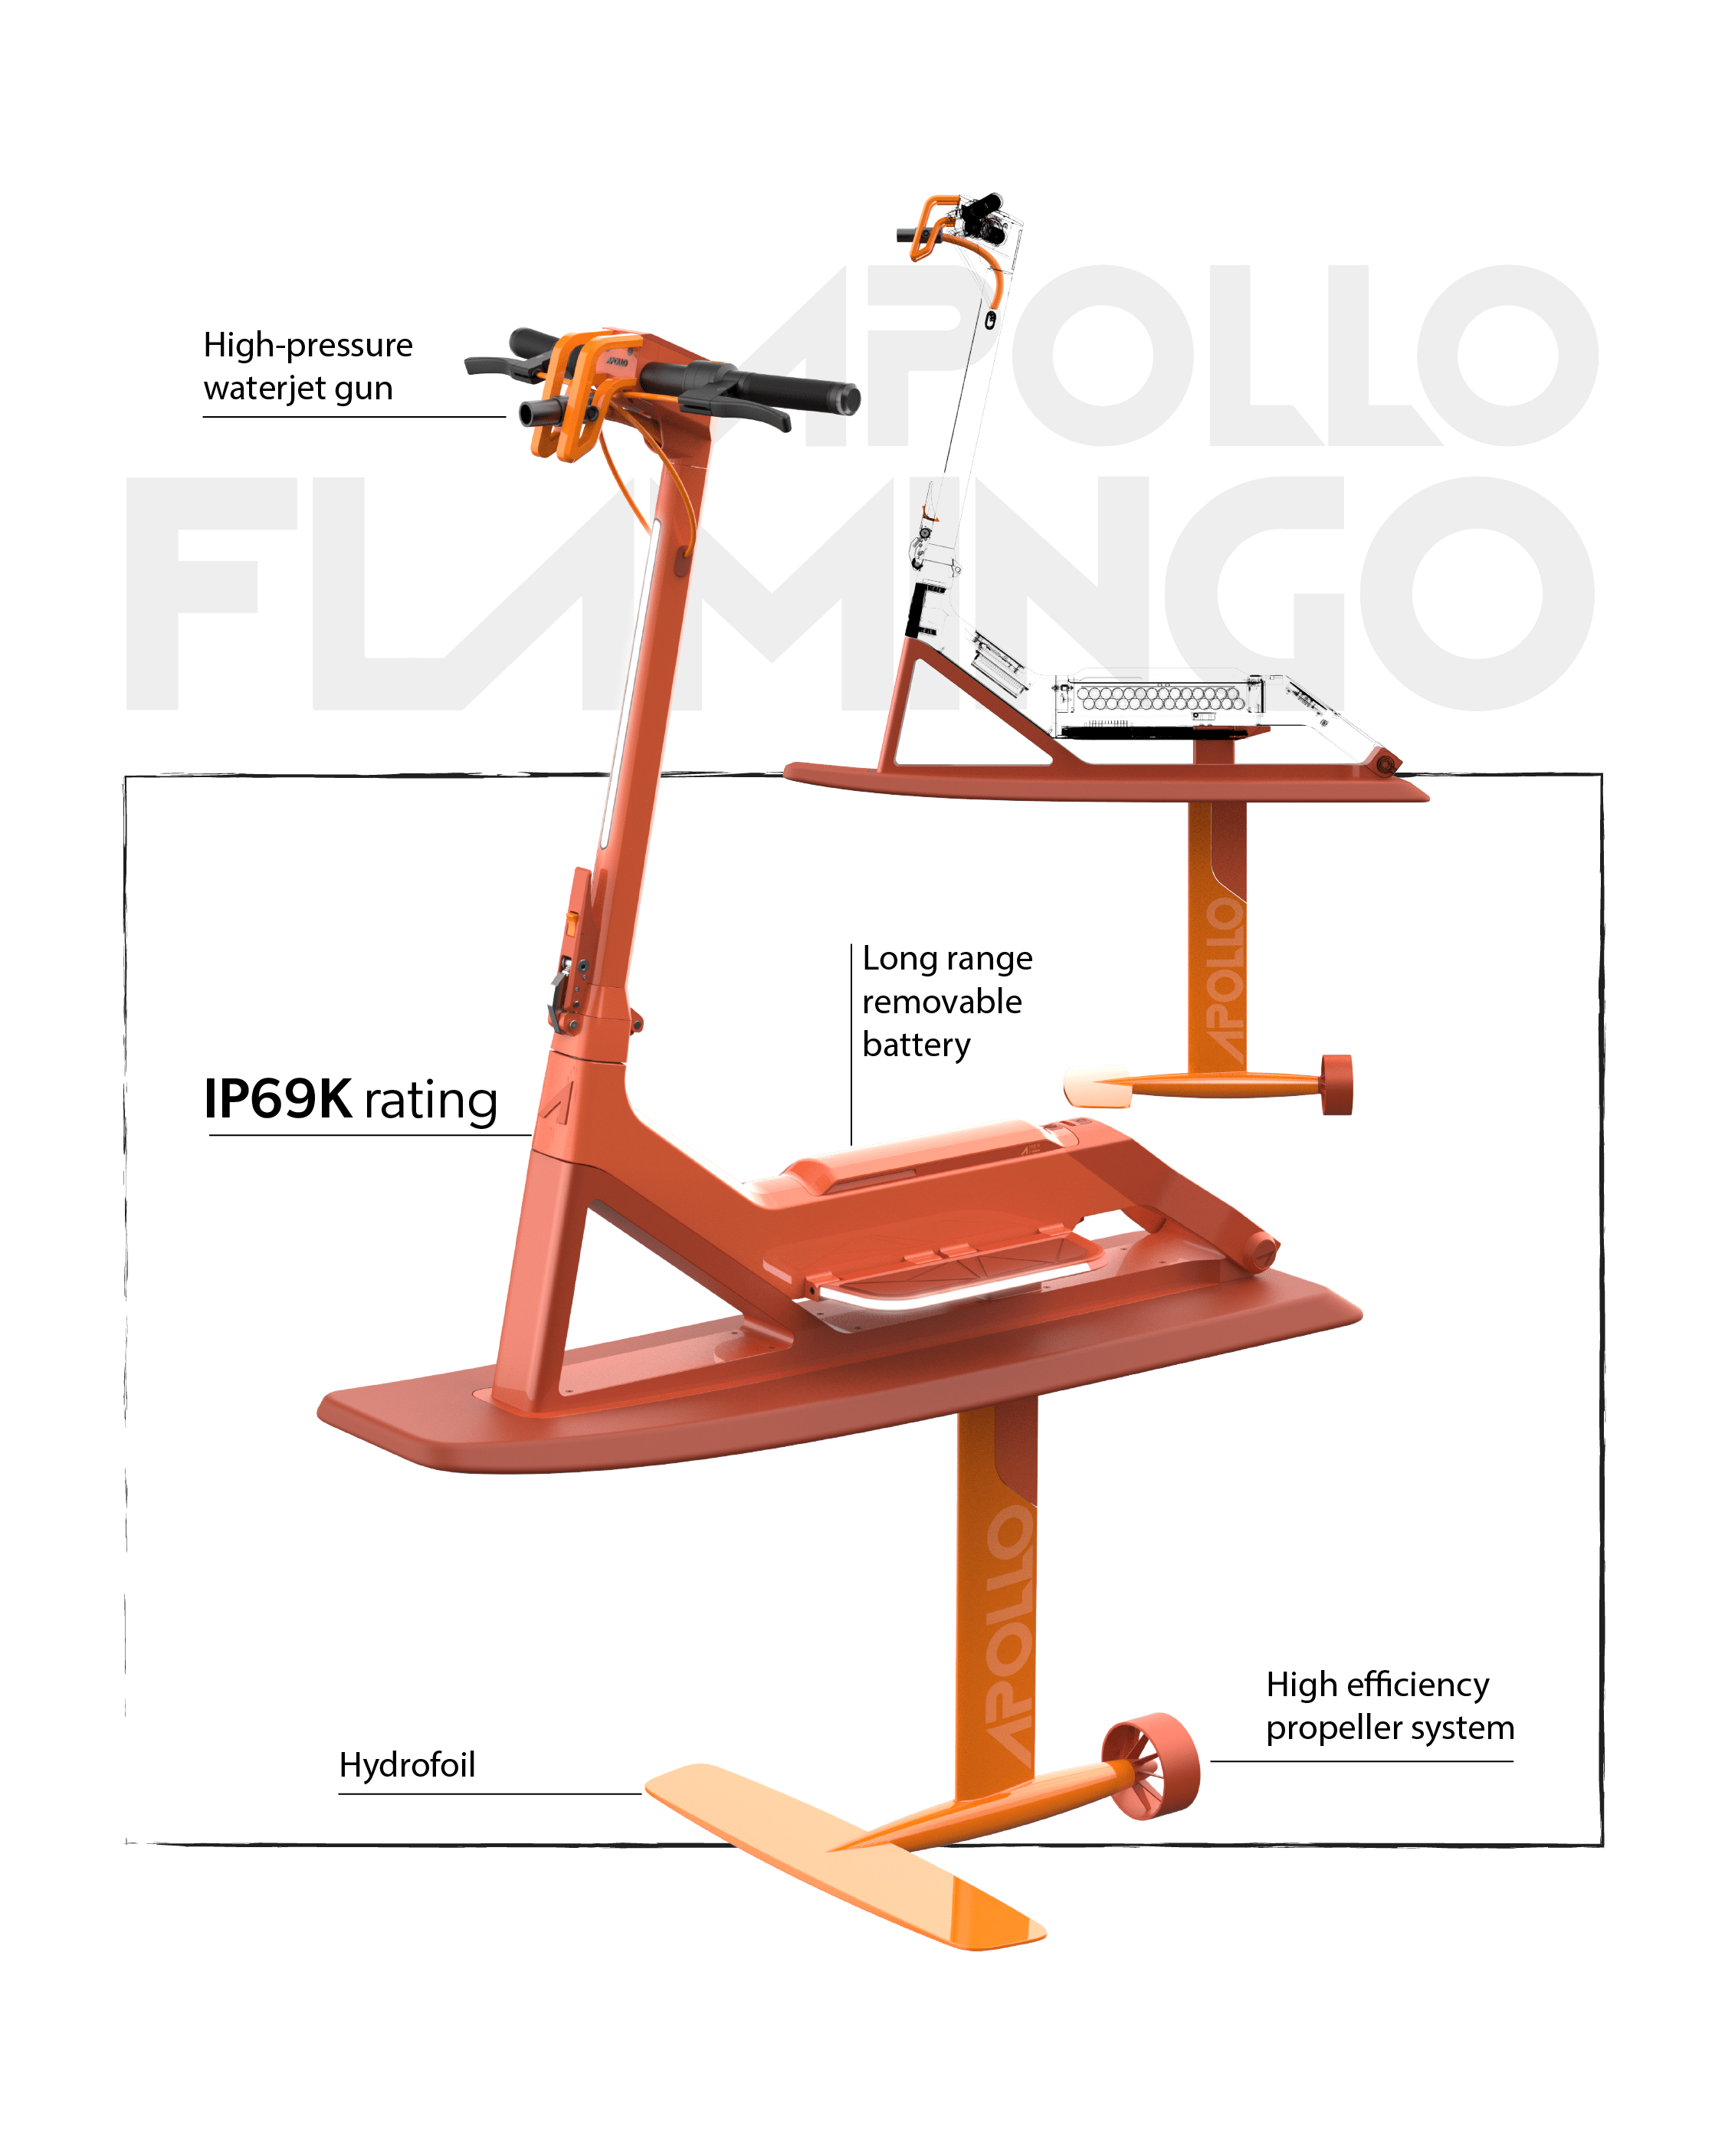 Introducing Apollo Flamingo - World's First Aquatic E-Scooter